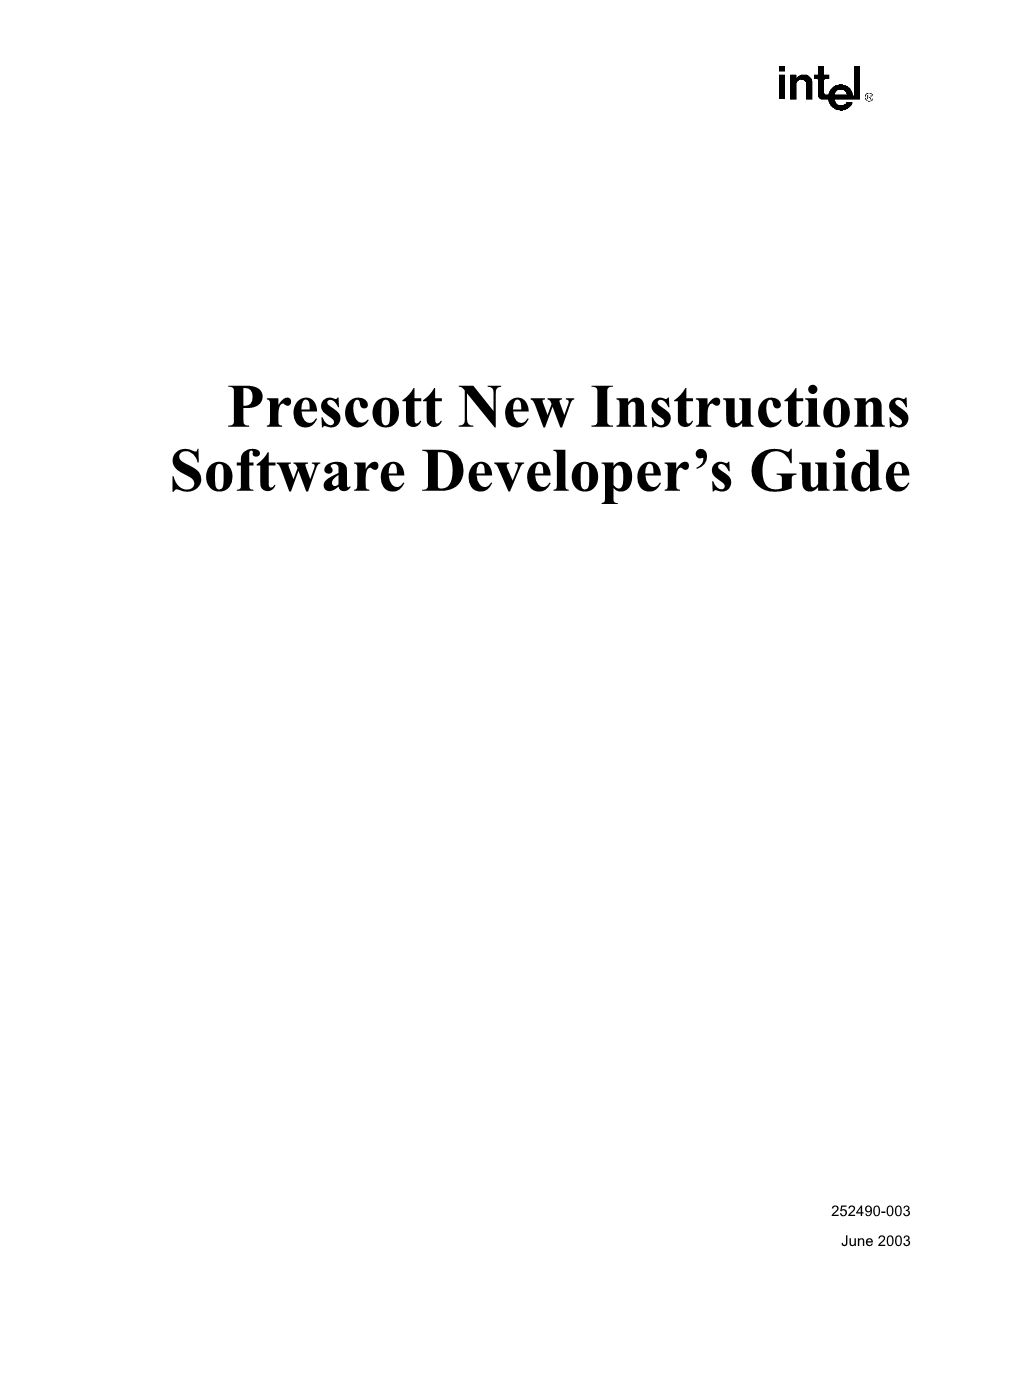 Prescott New Instructions Software Developer's Guide